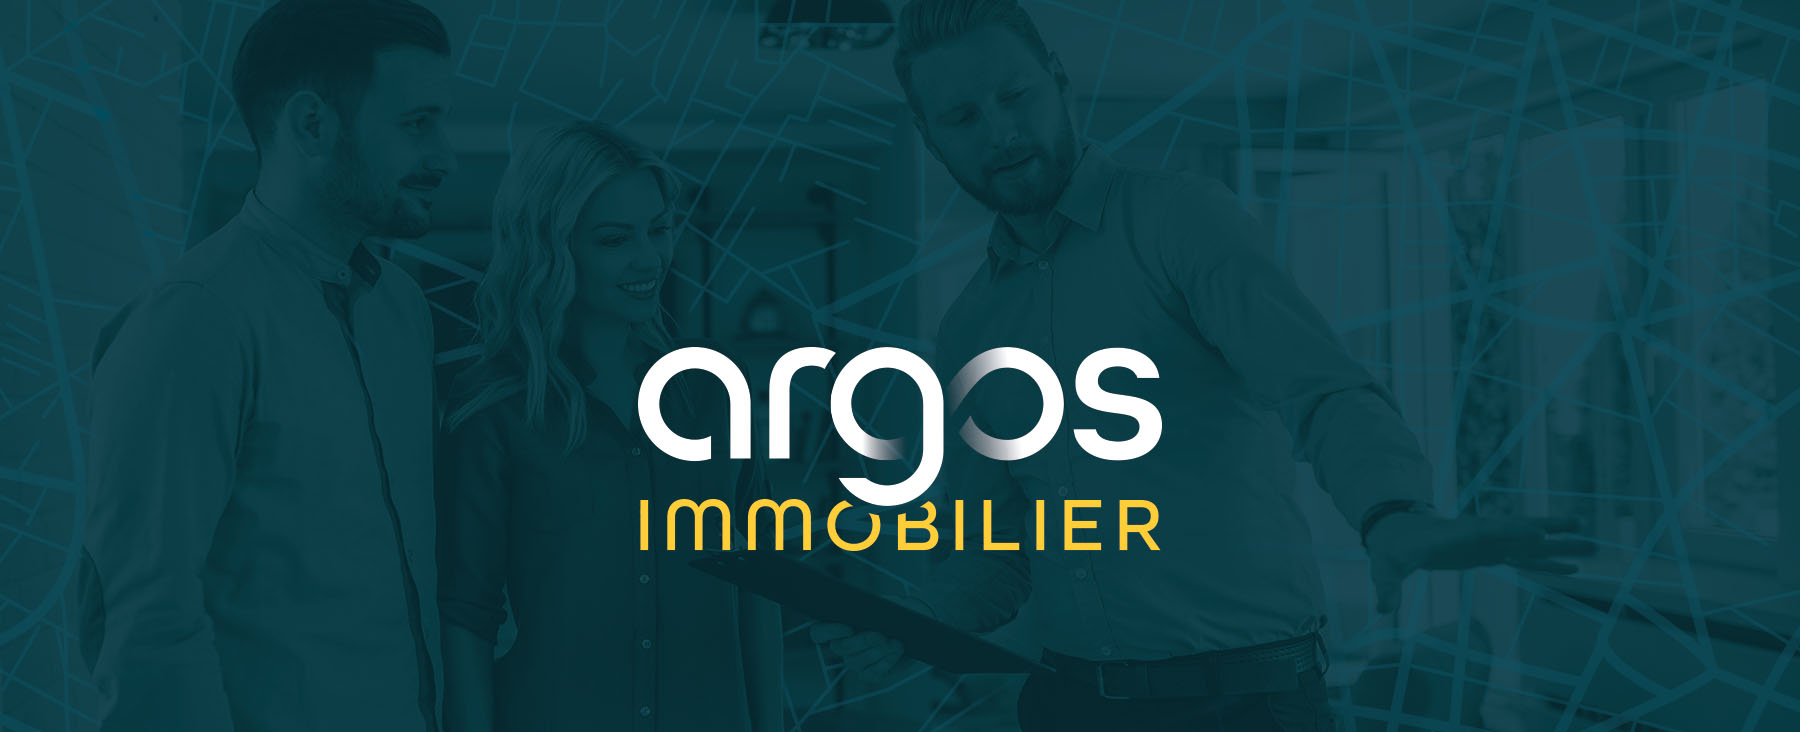 Argos-presentation